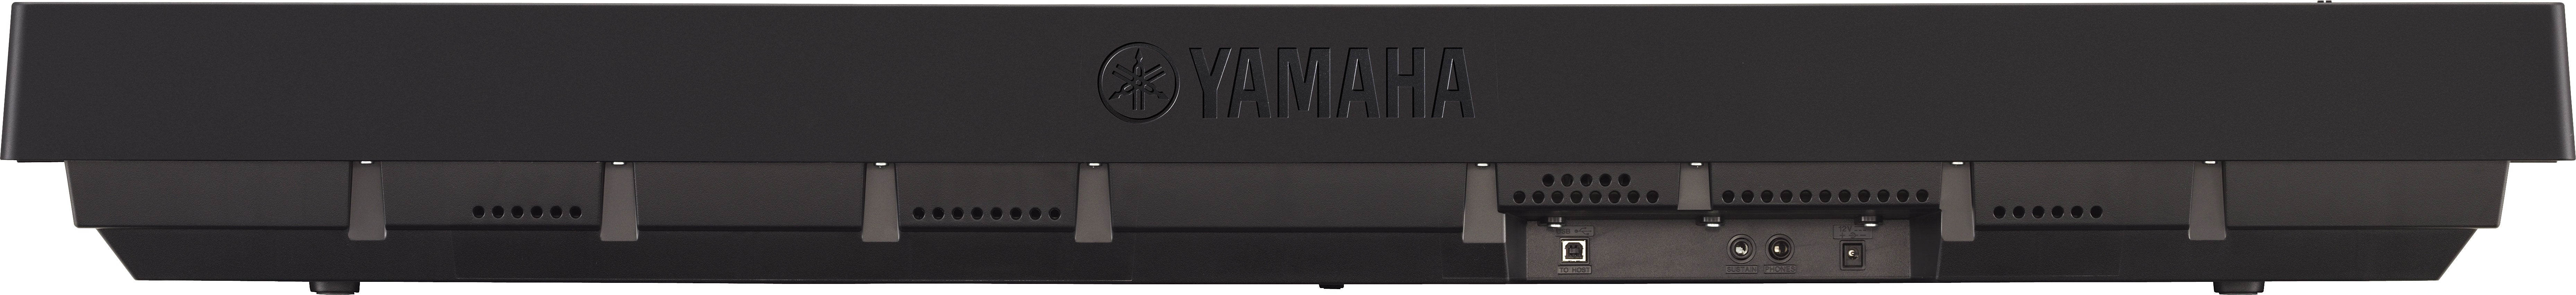 Yamaha P45 88 Key Portable Digital Piano - Black